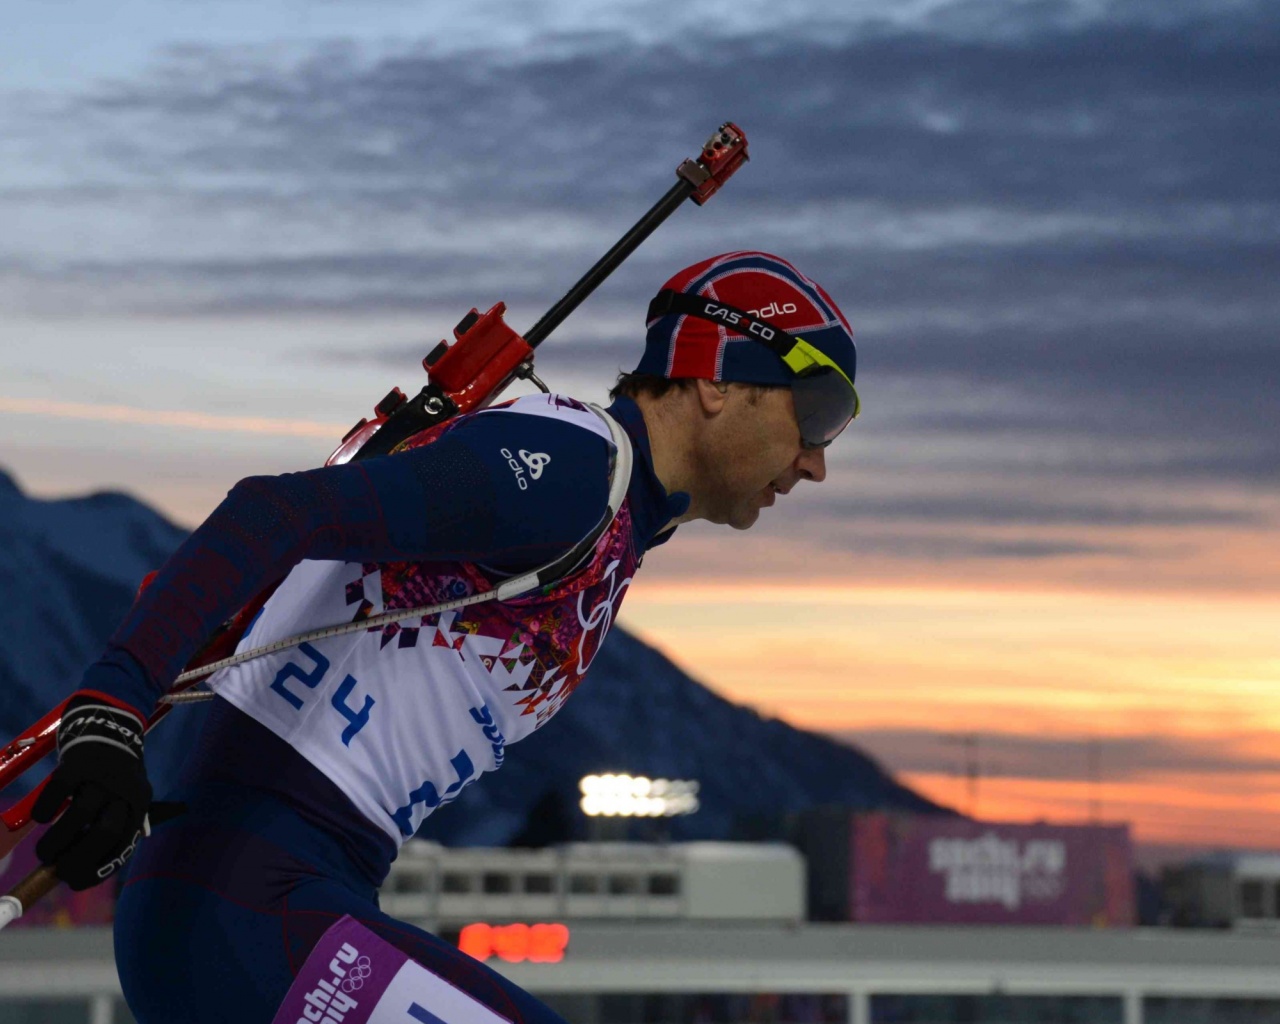 Biathlete On The Track In Sochi 2014